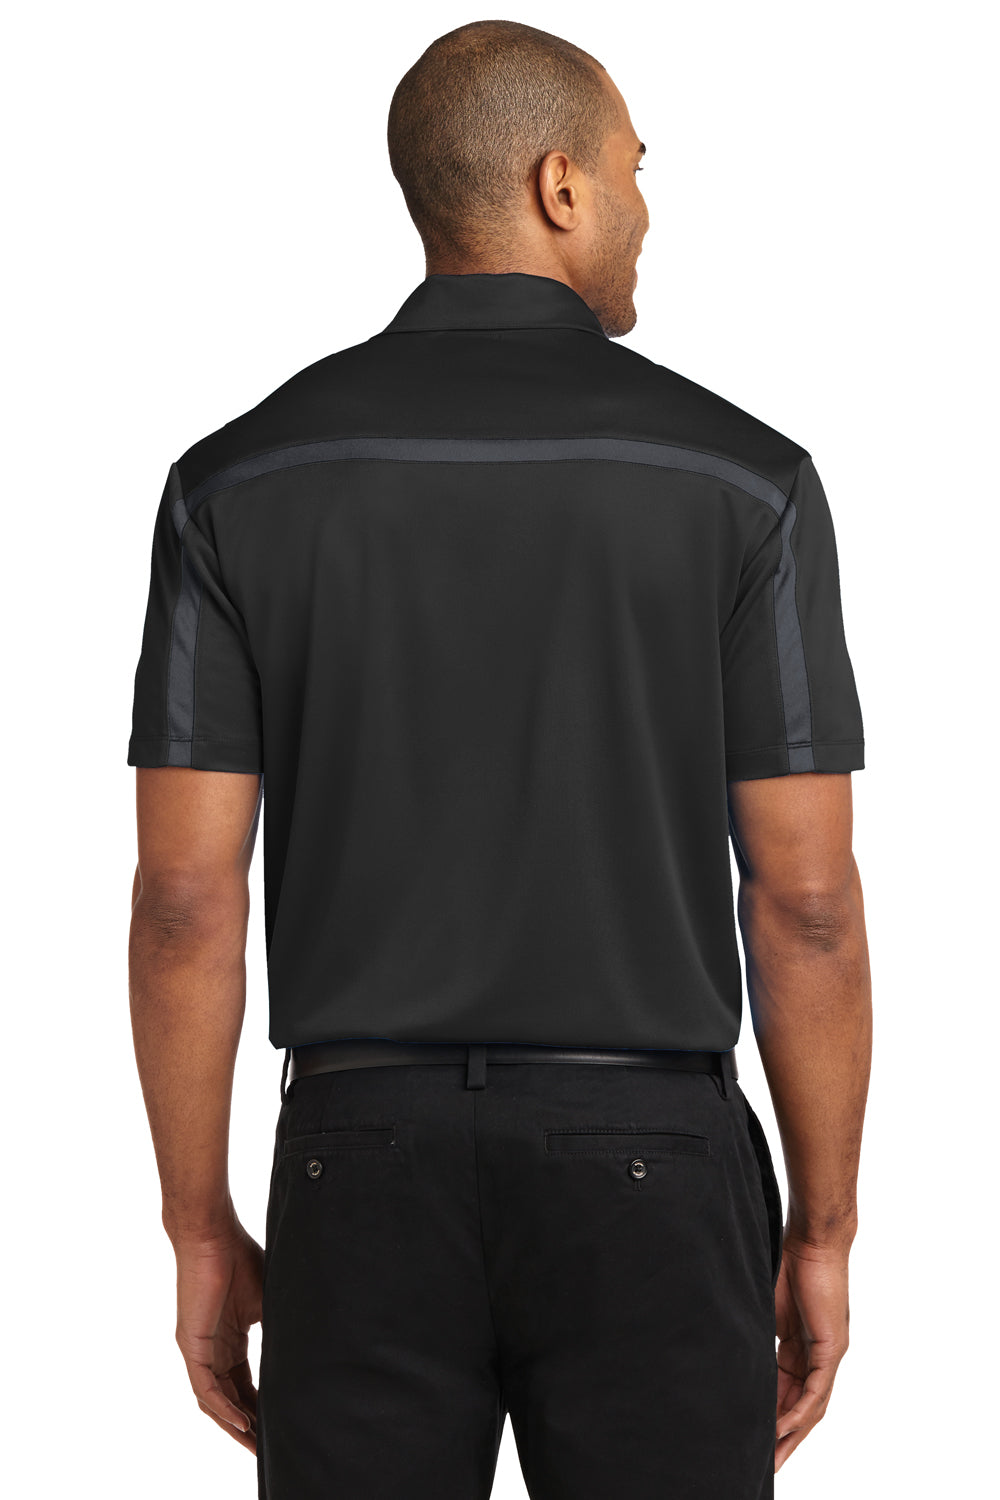 Port Authority K547 Mens Silk Touch Performance Moisture Wicking Short Sleeve Polo Shirt Black/Grey Back